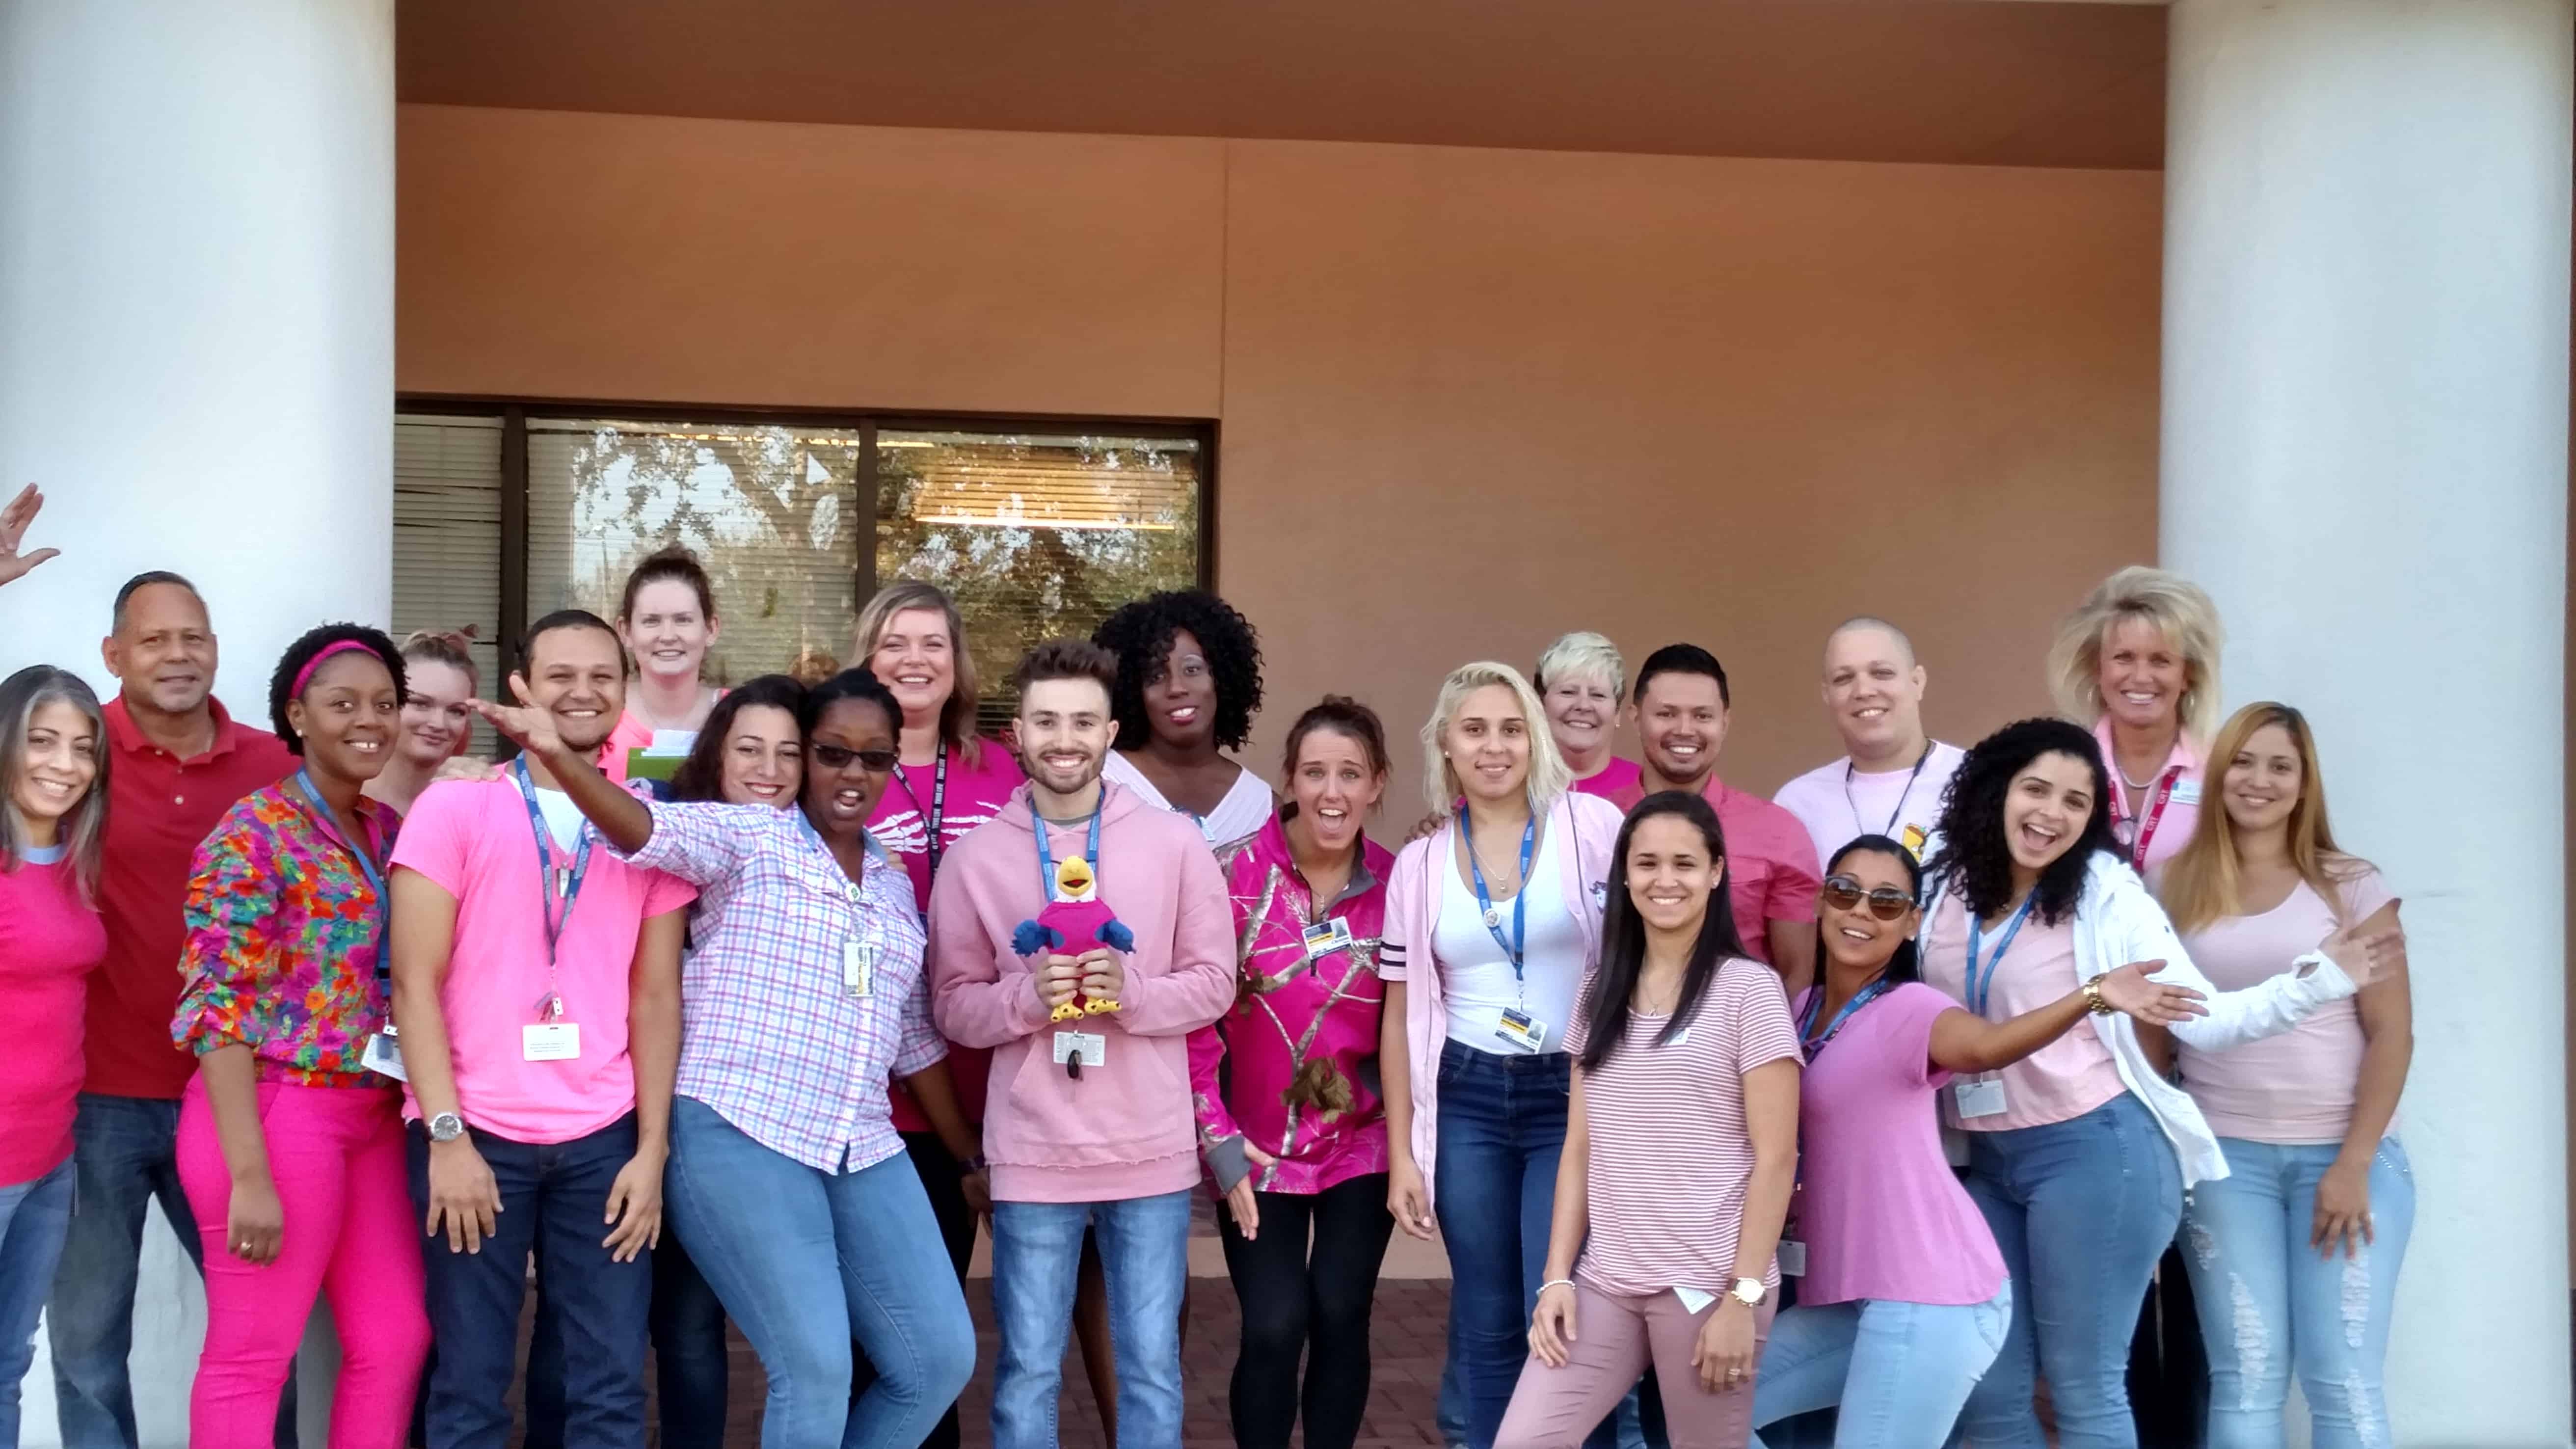 The Orlando Campus Wishes Everyone a Happy Pinktober